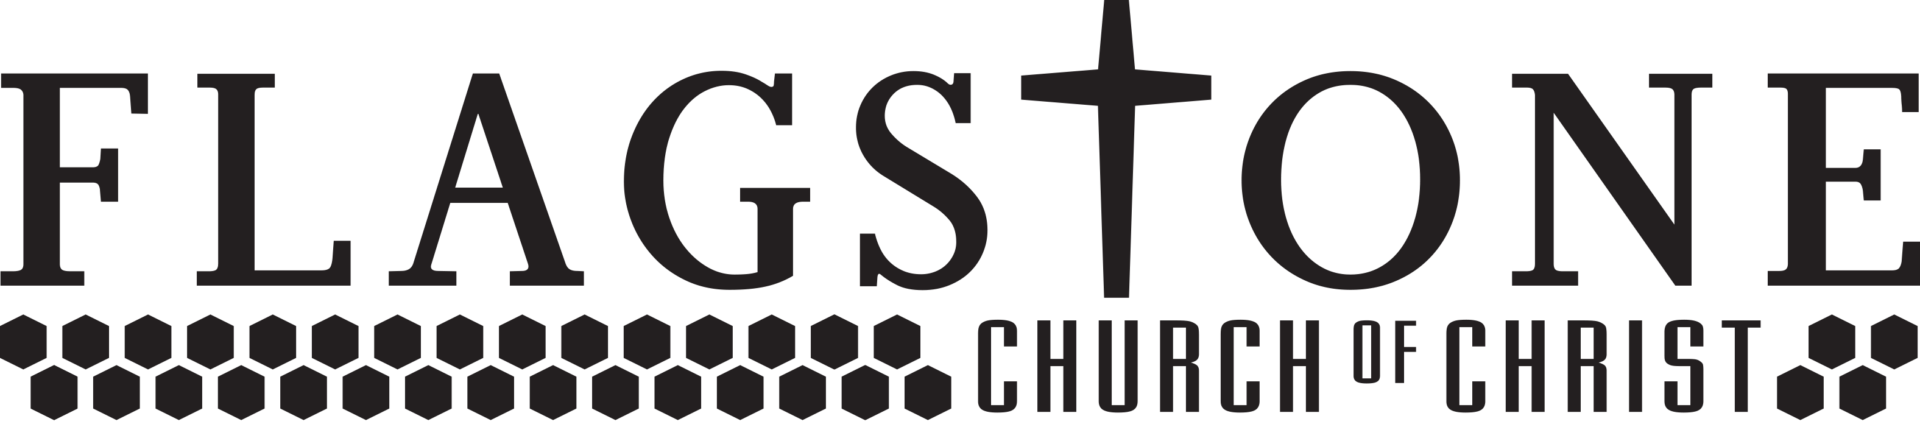 Flagstone Church of Christ